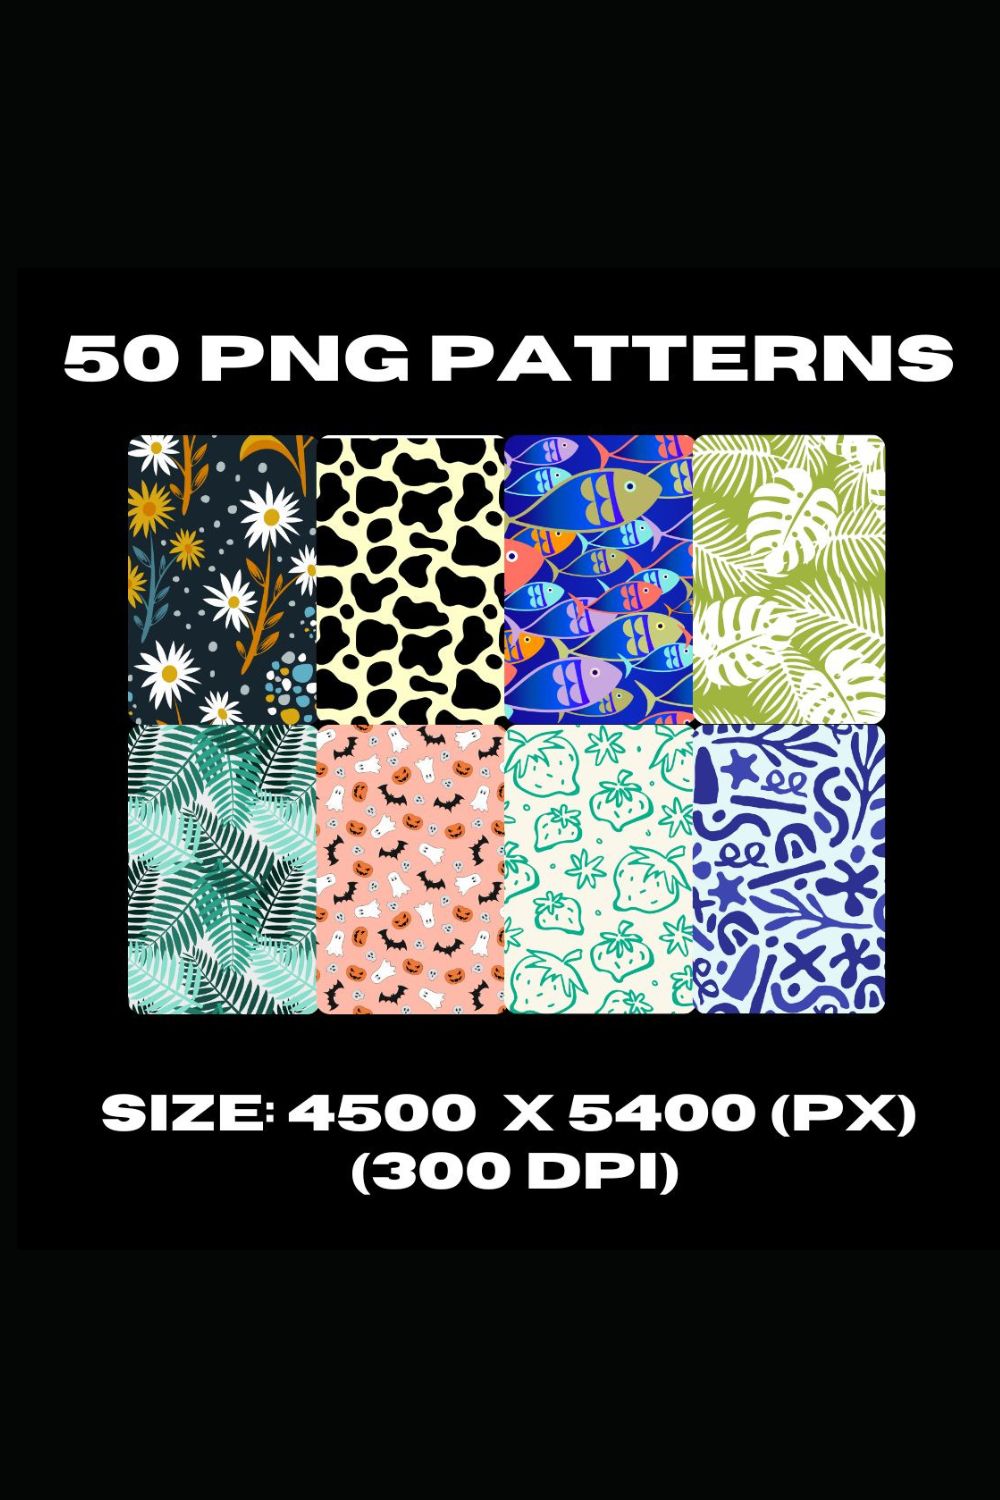 50 Graphic pattern design bundle for POD pinterest preview image.